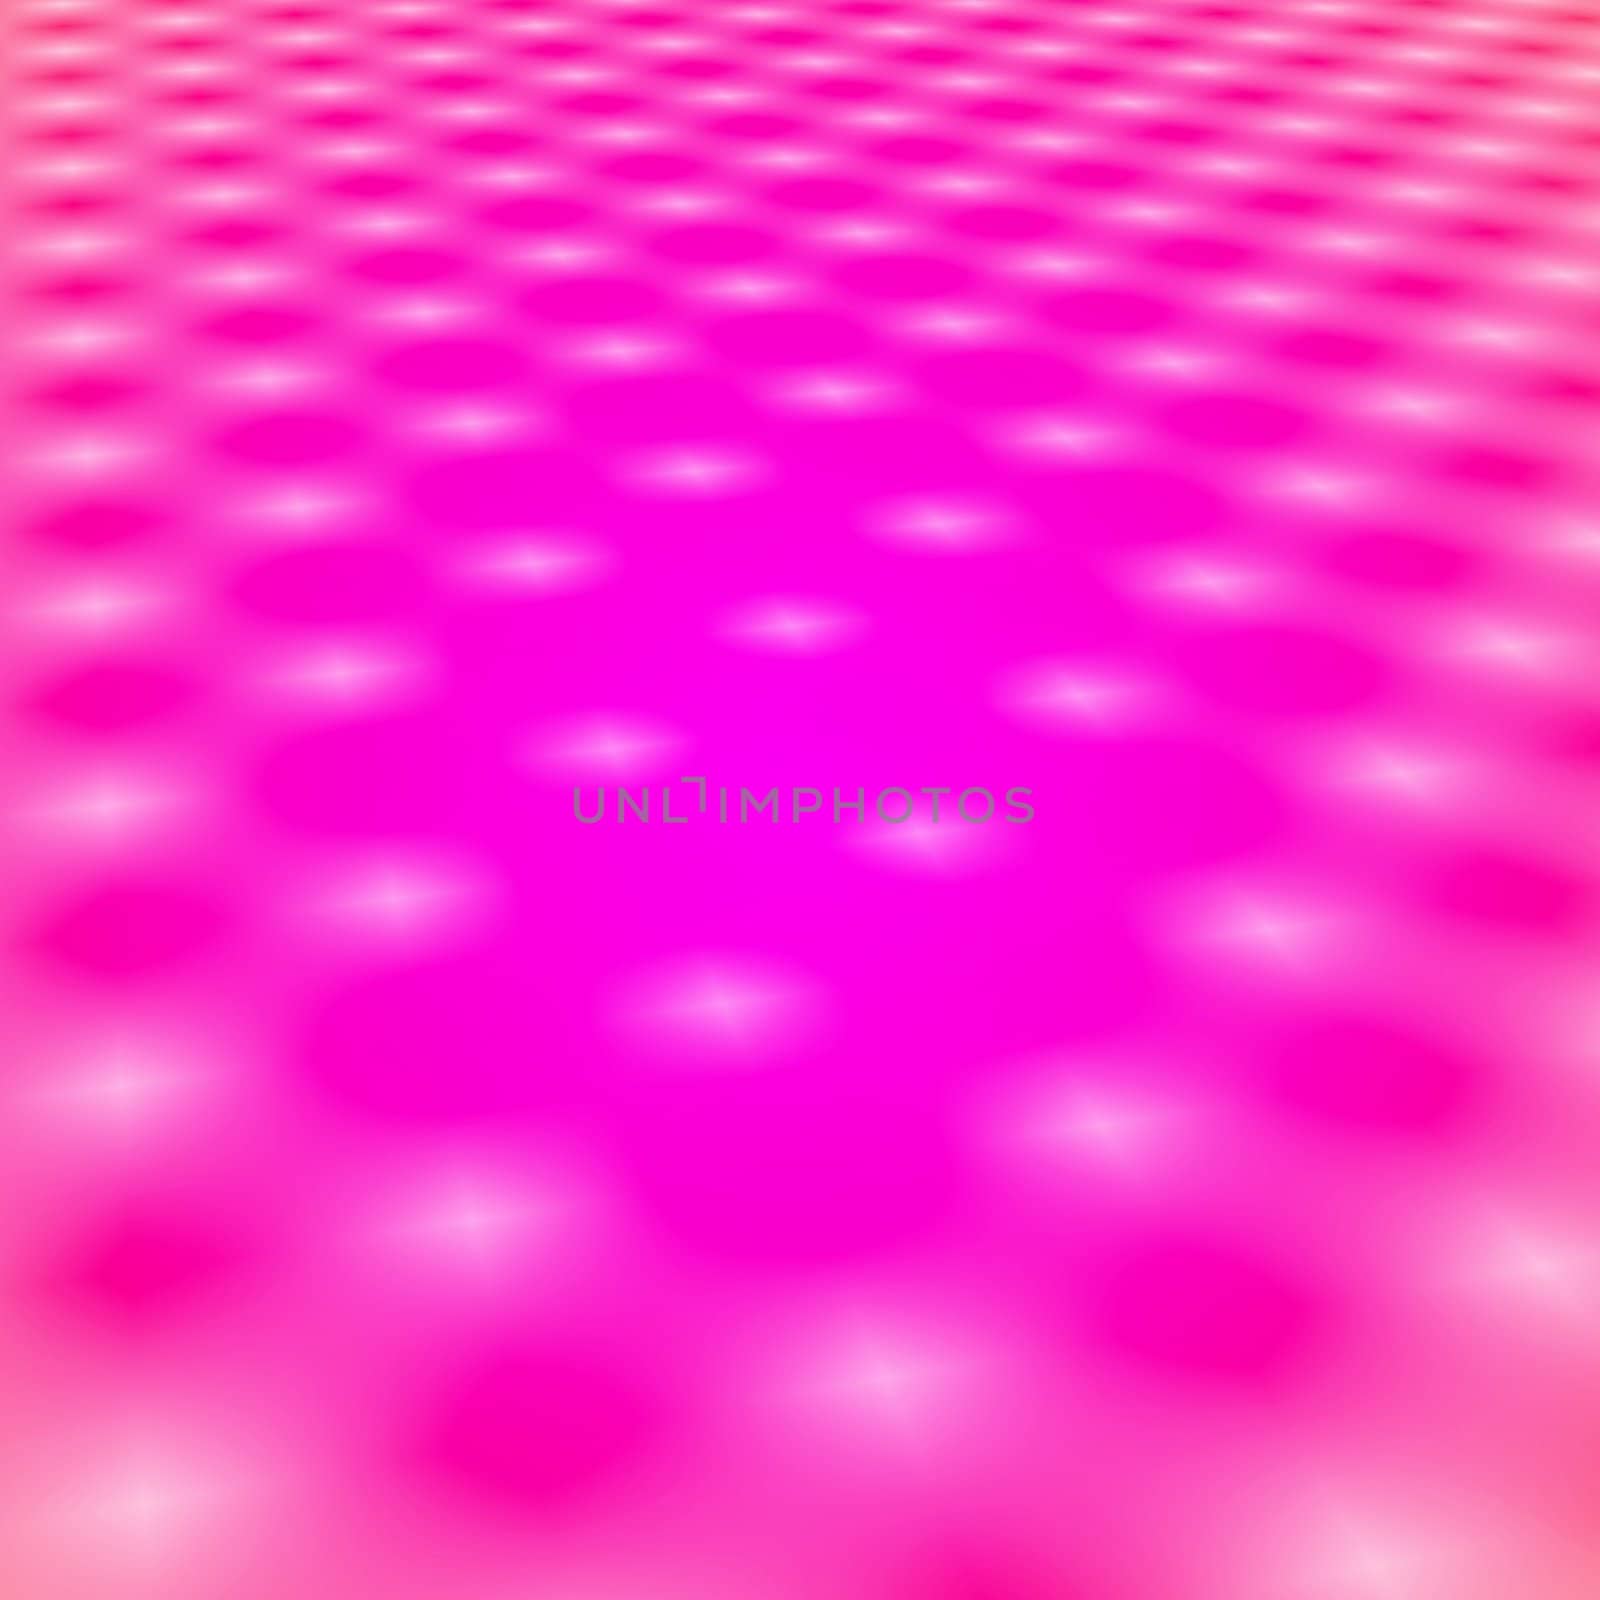 pinkish dancefloor background